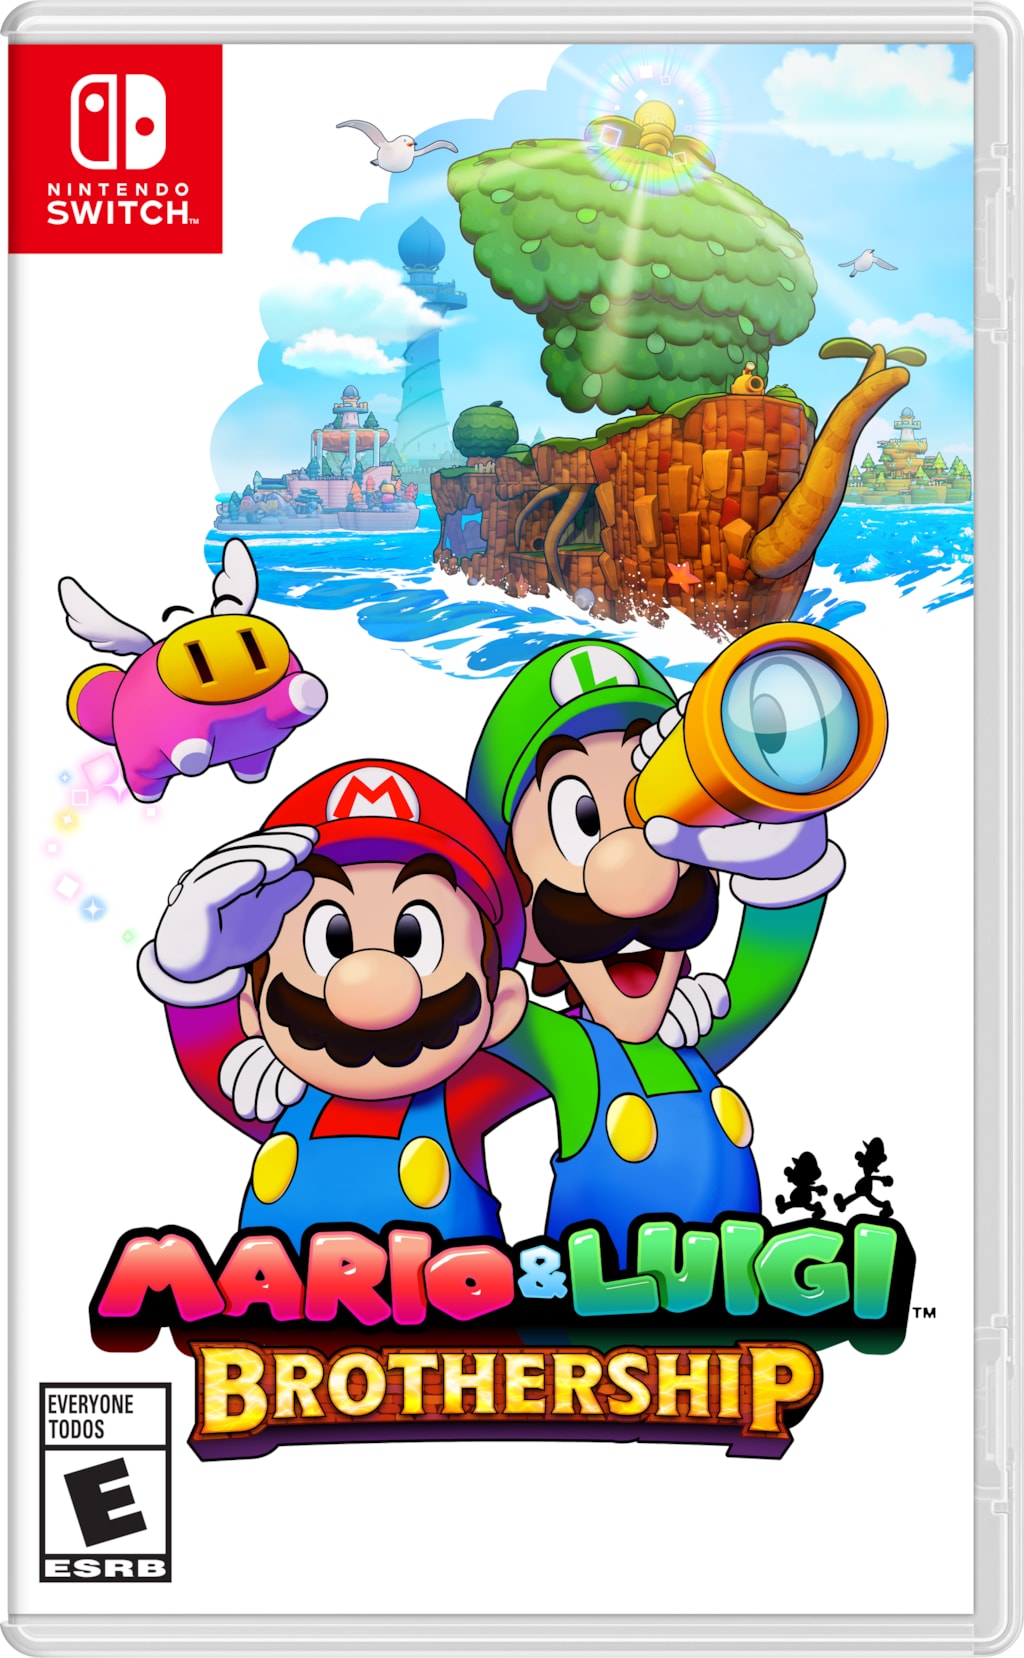 Mario & Luigi Brothership boxart